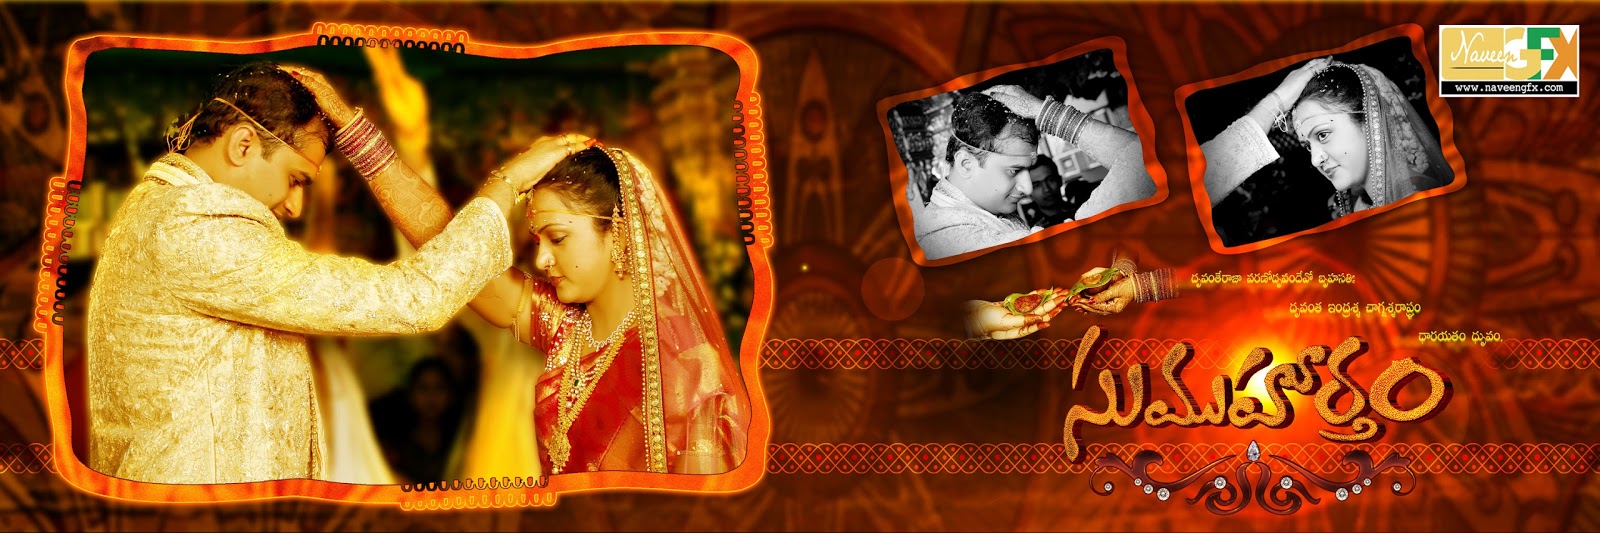 indian wedding karizma album psd files free downloads